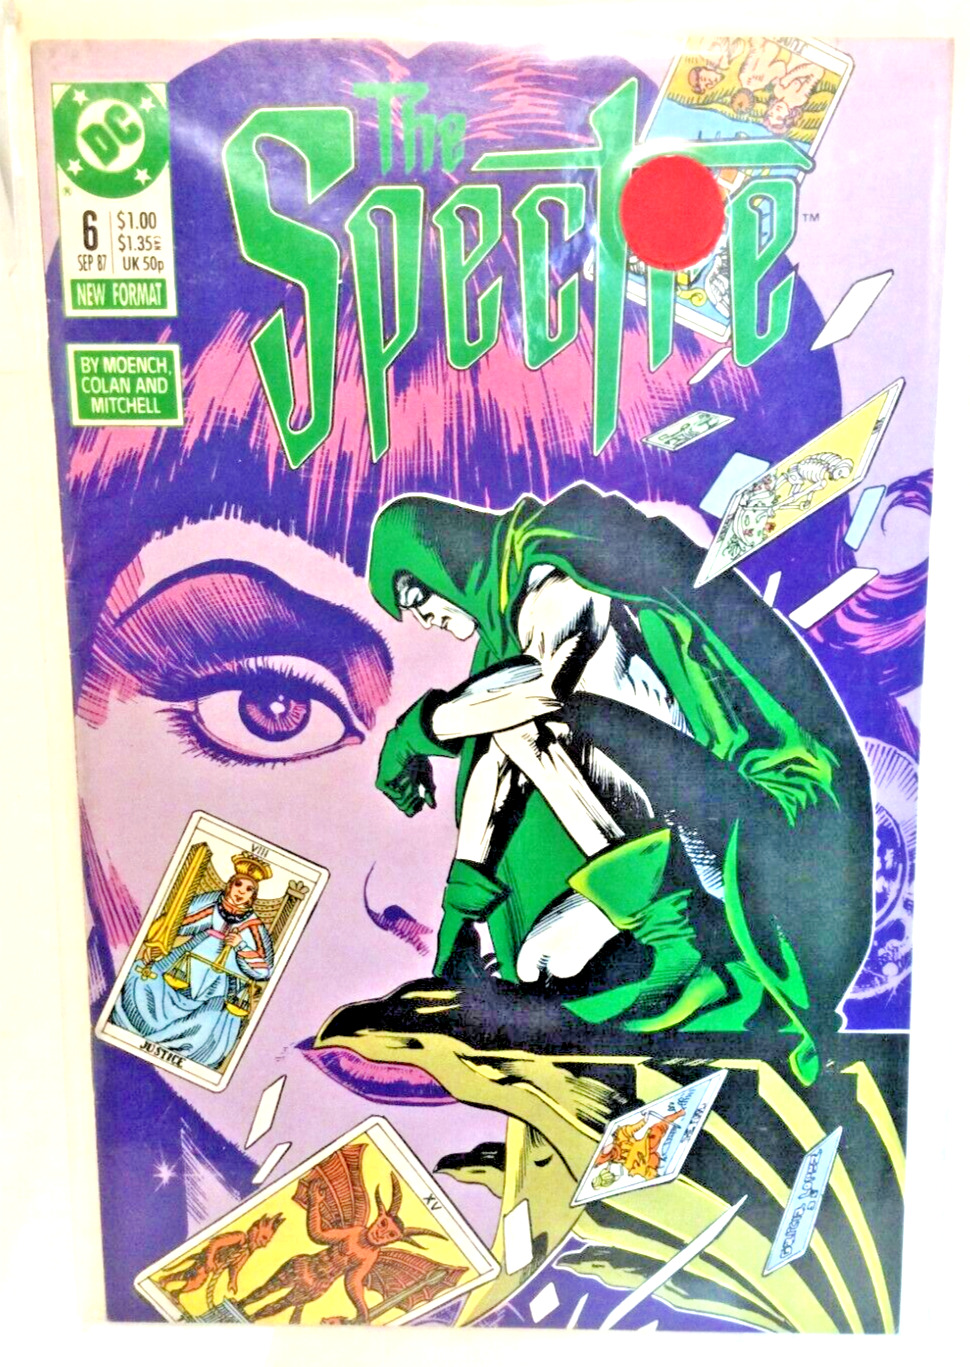 The Spectre #6 (DC Comics Sep 87)